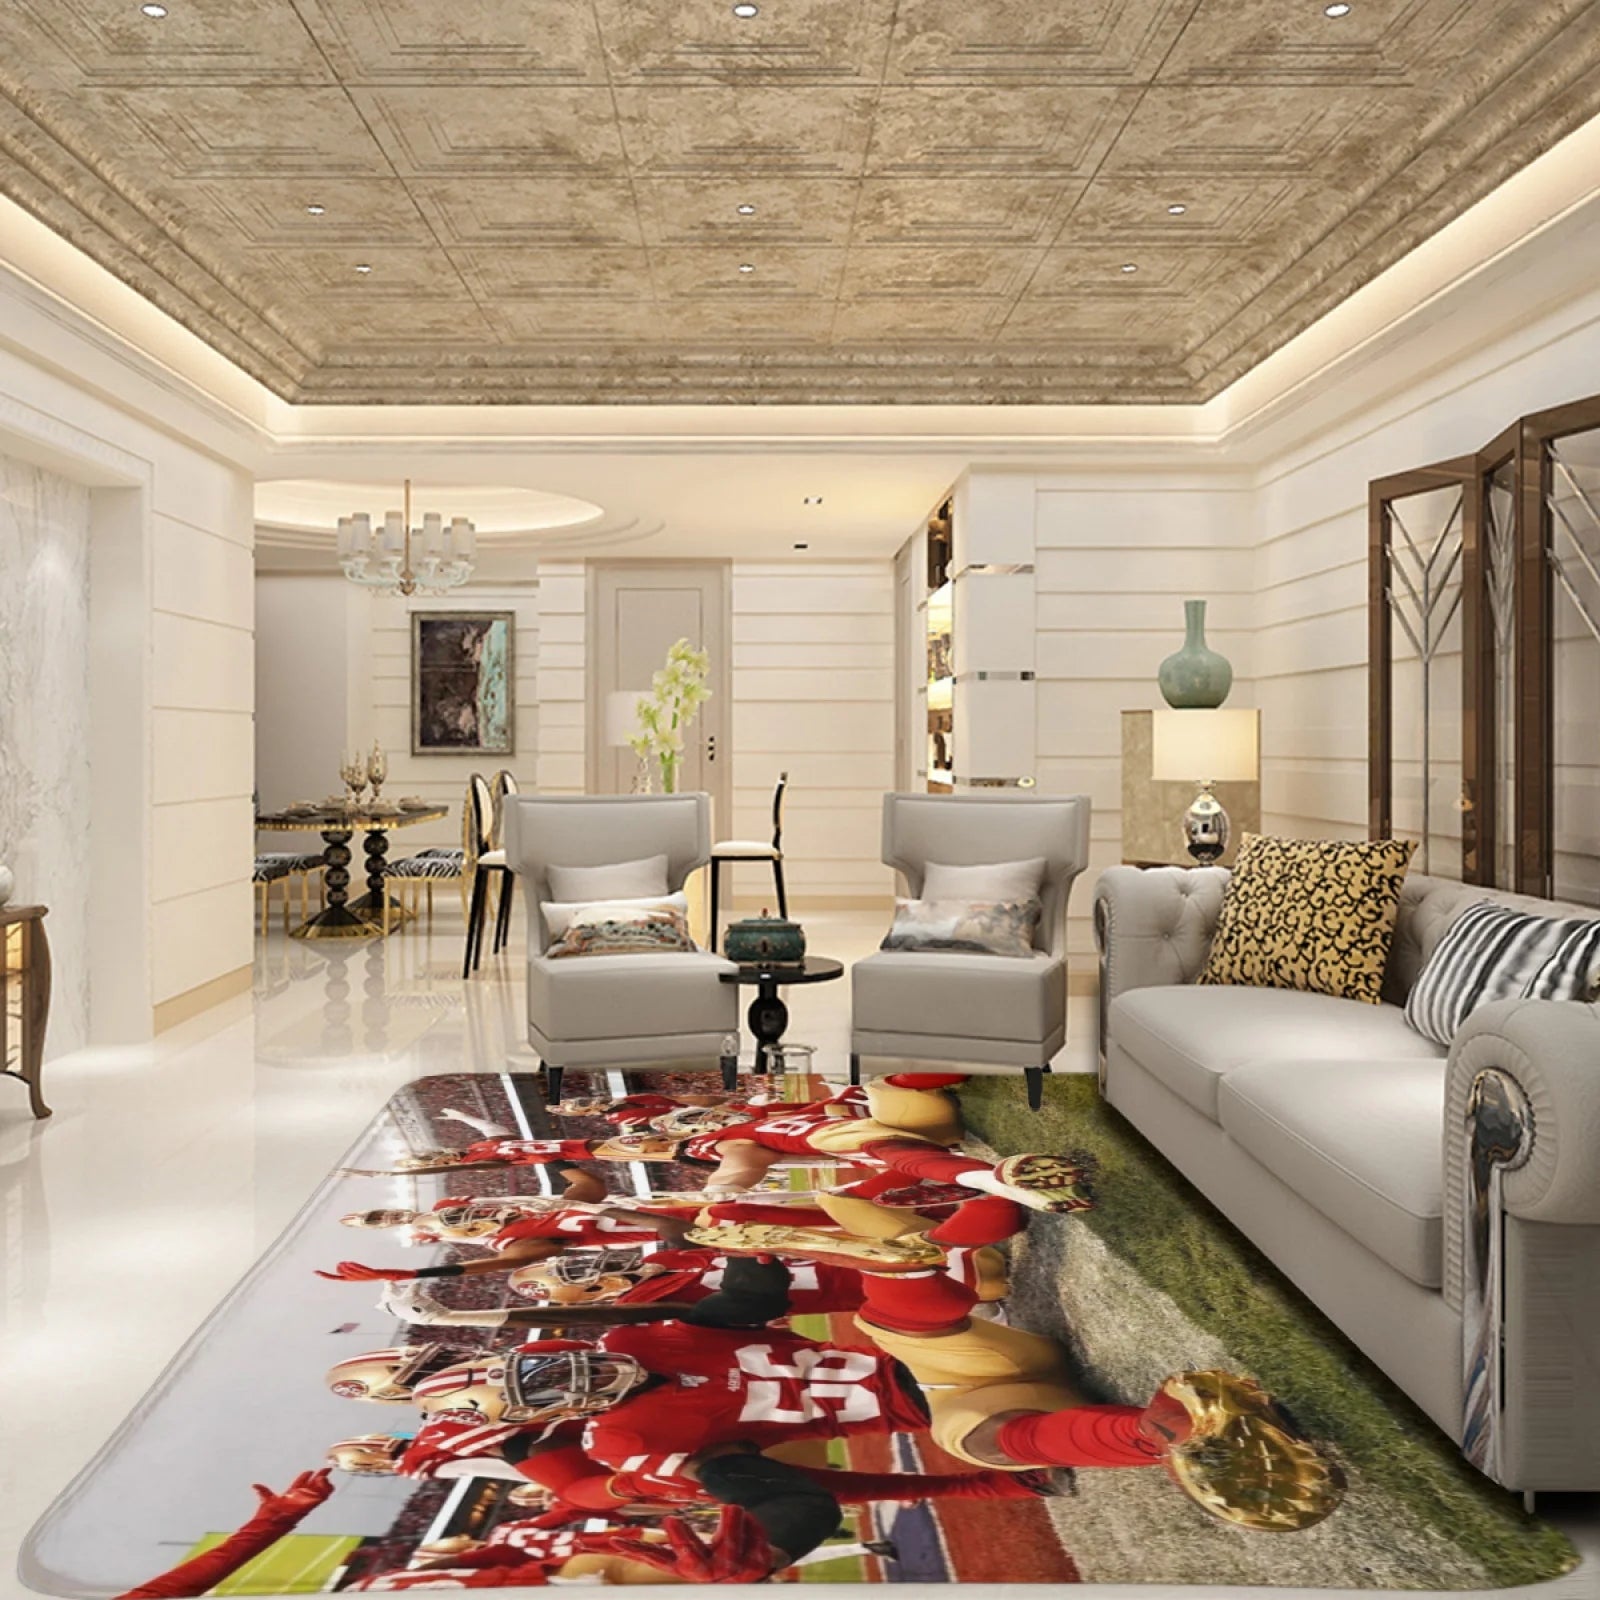 San Francisco 49ers Football Team Carpet Living Room Bedroom Mats Kitchen Bathroom Rugs